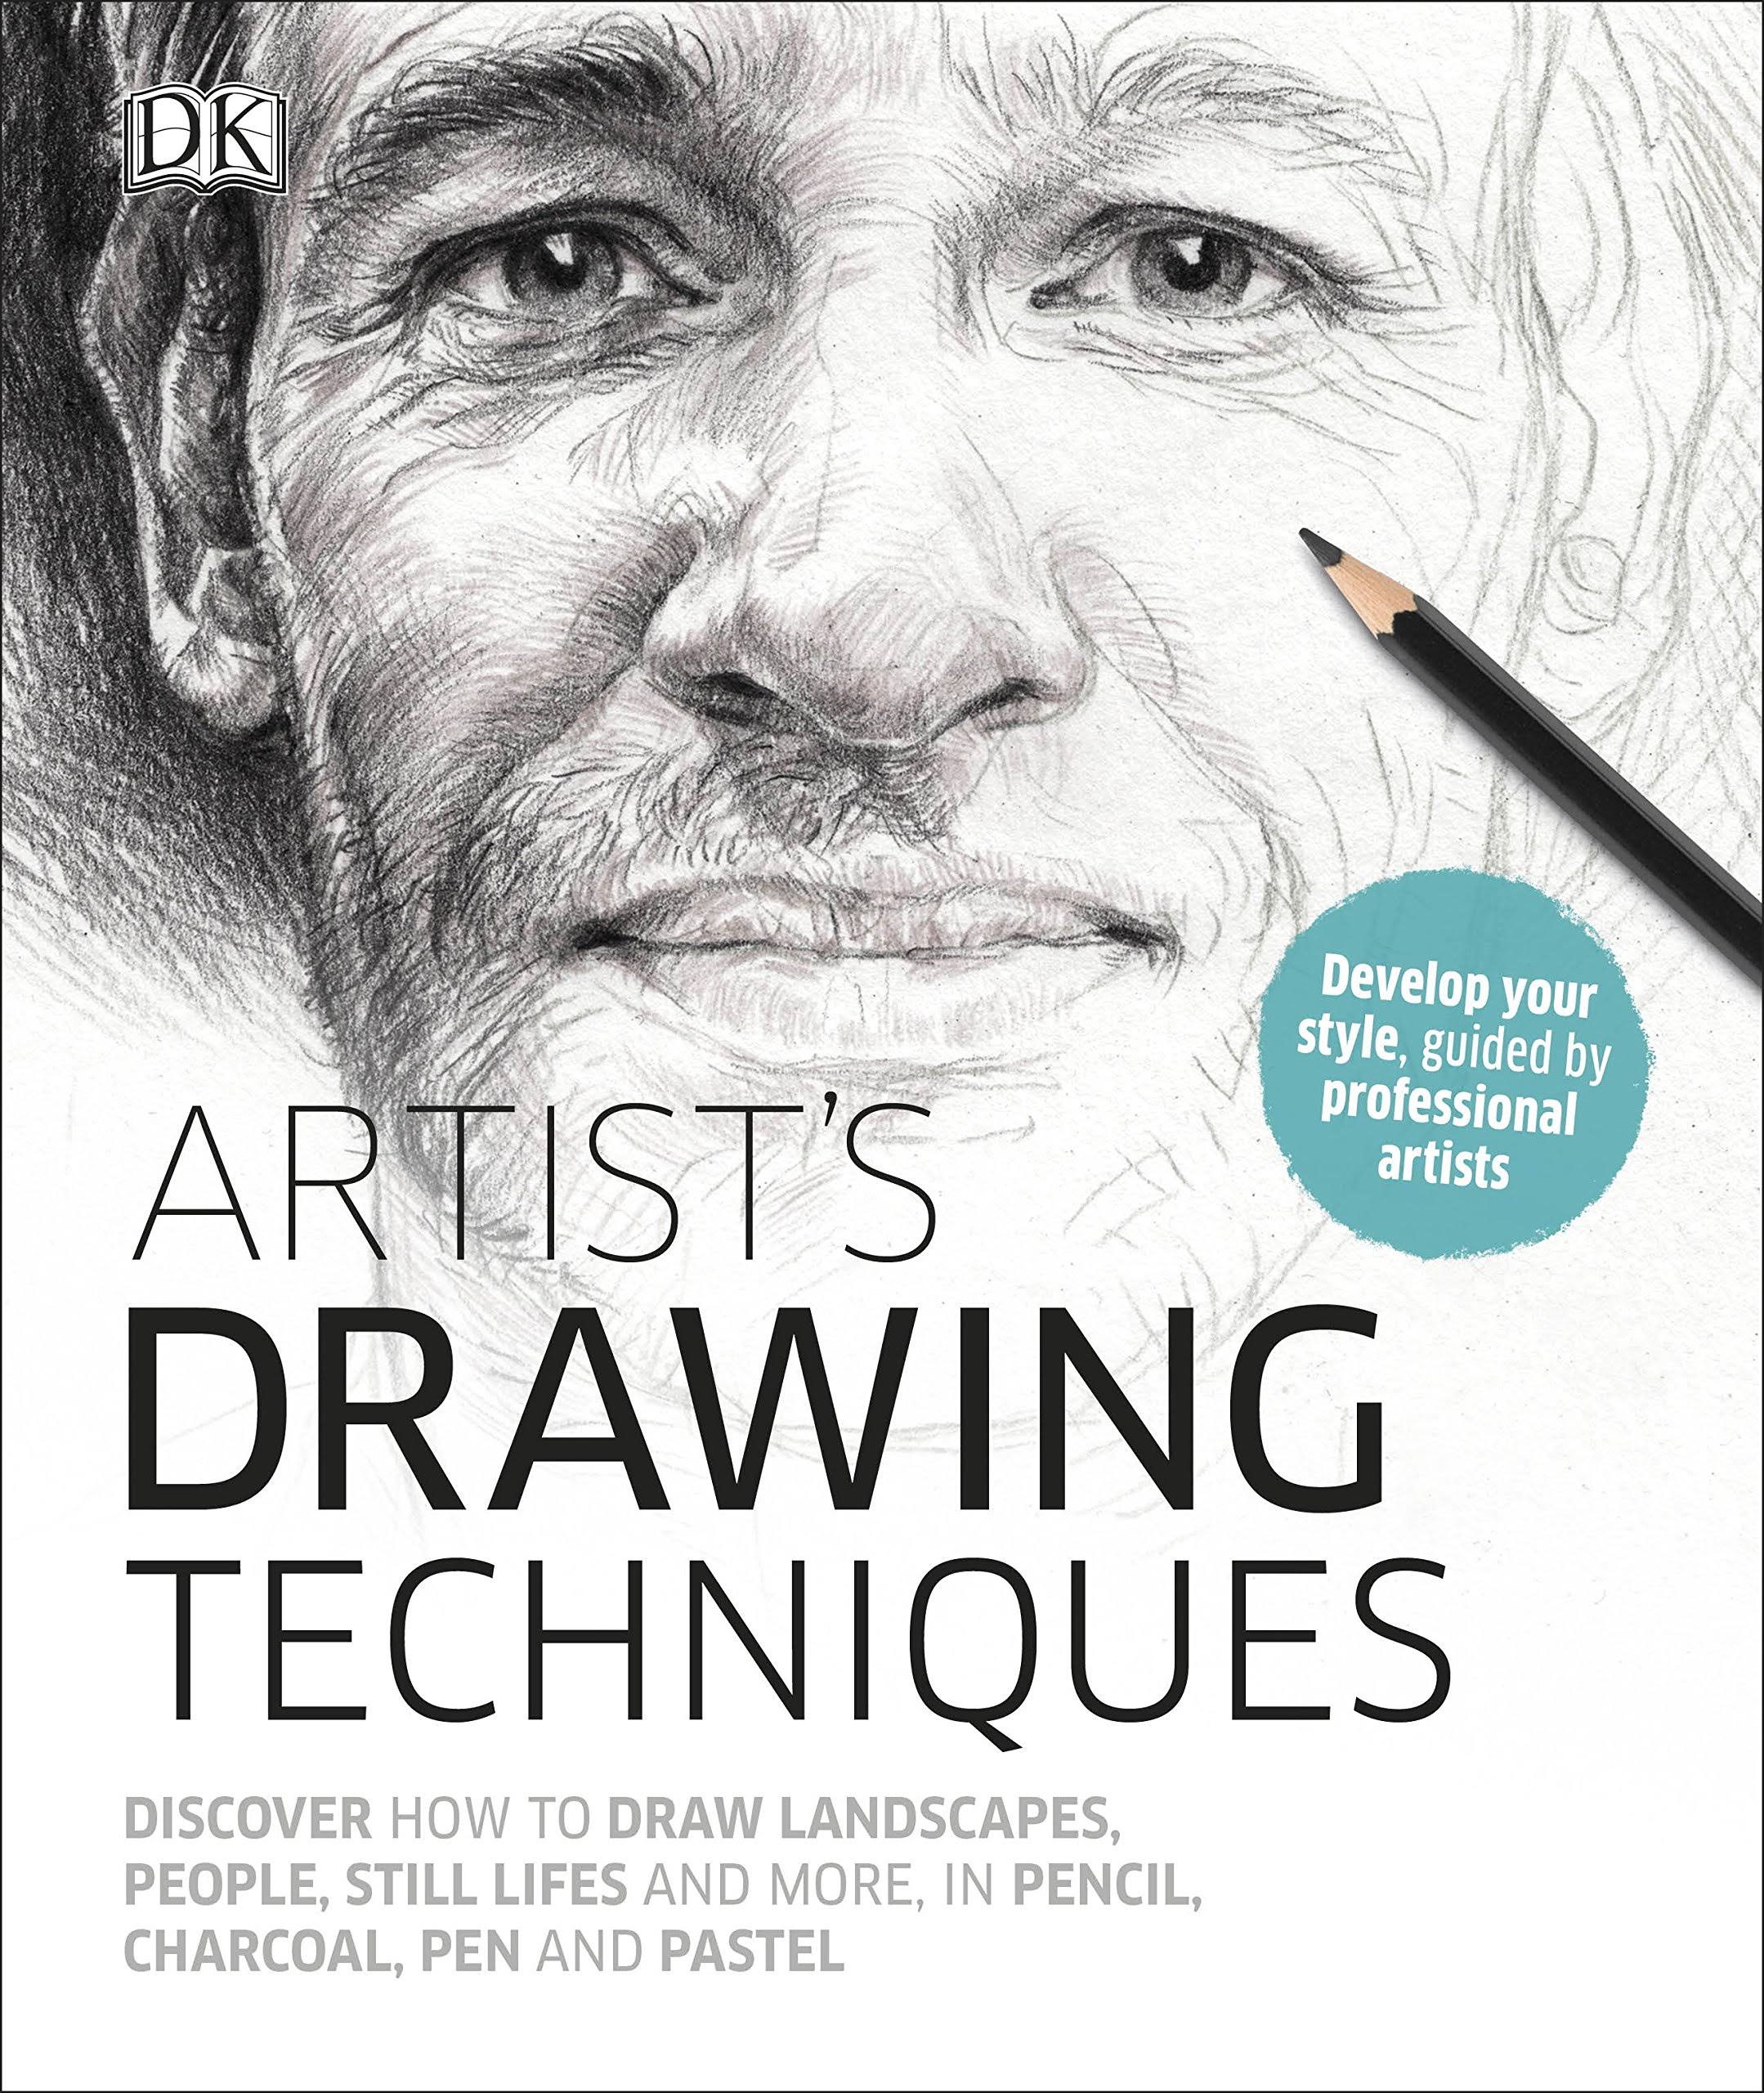 Artist's Drawing Techniques - DK